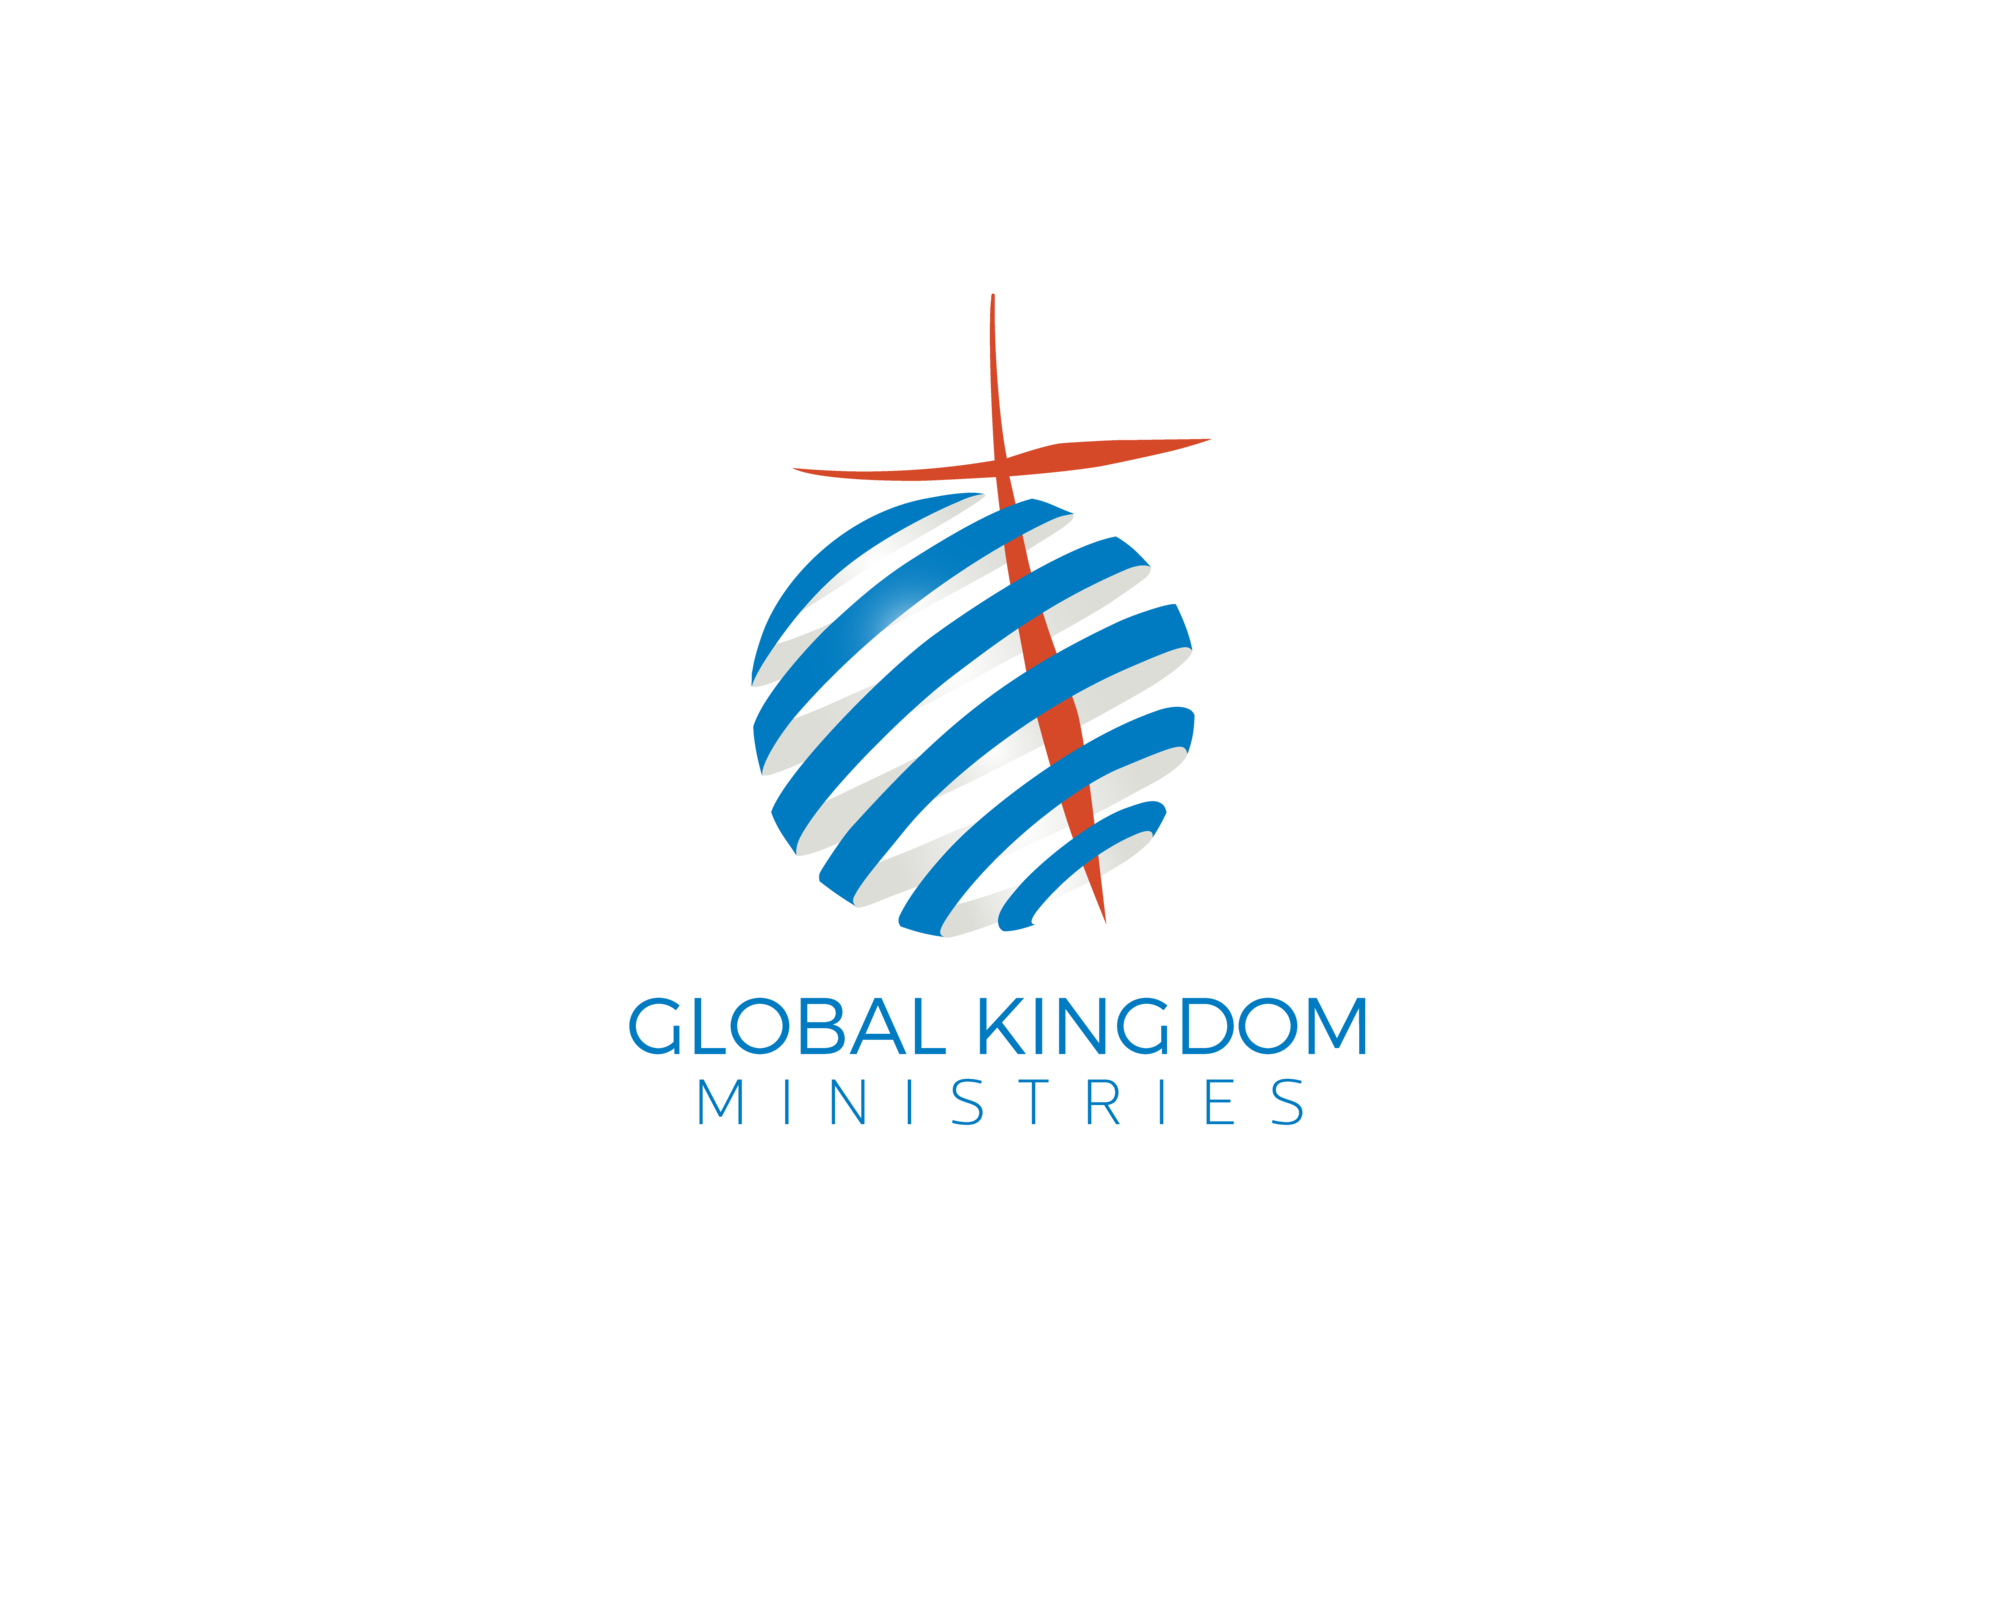 Global Kingdom Ministries